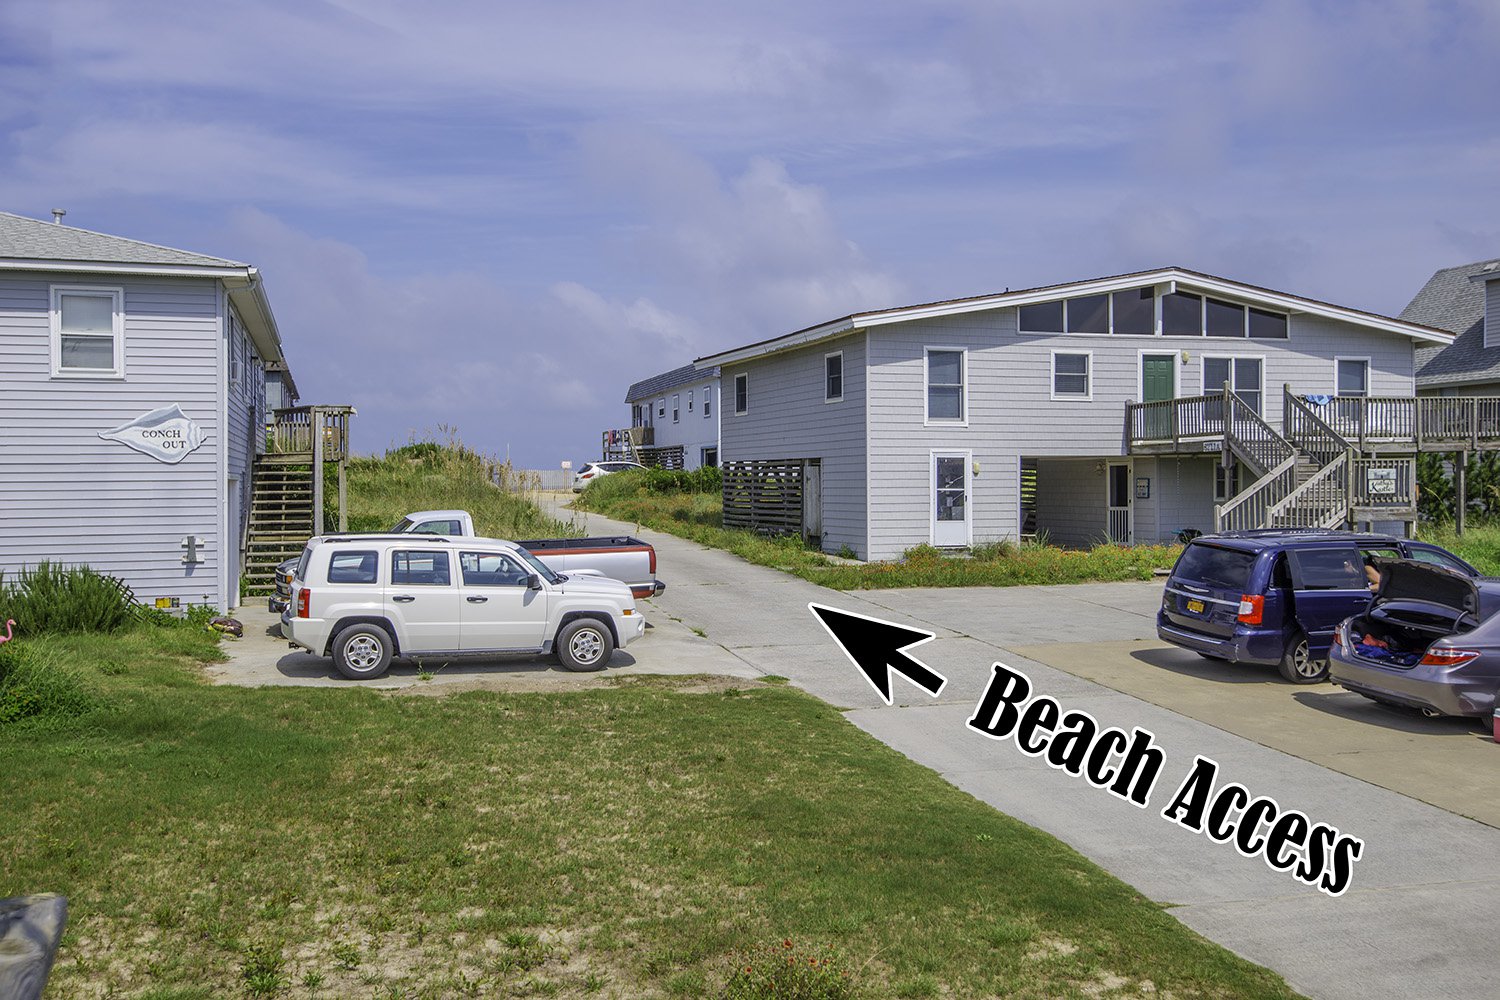 Direct Beach Access 3 houses away! 